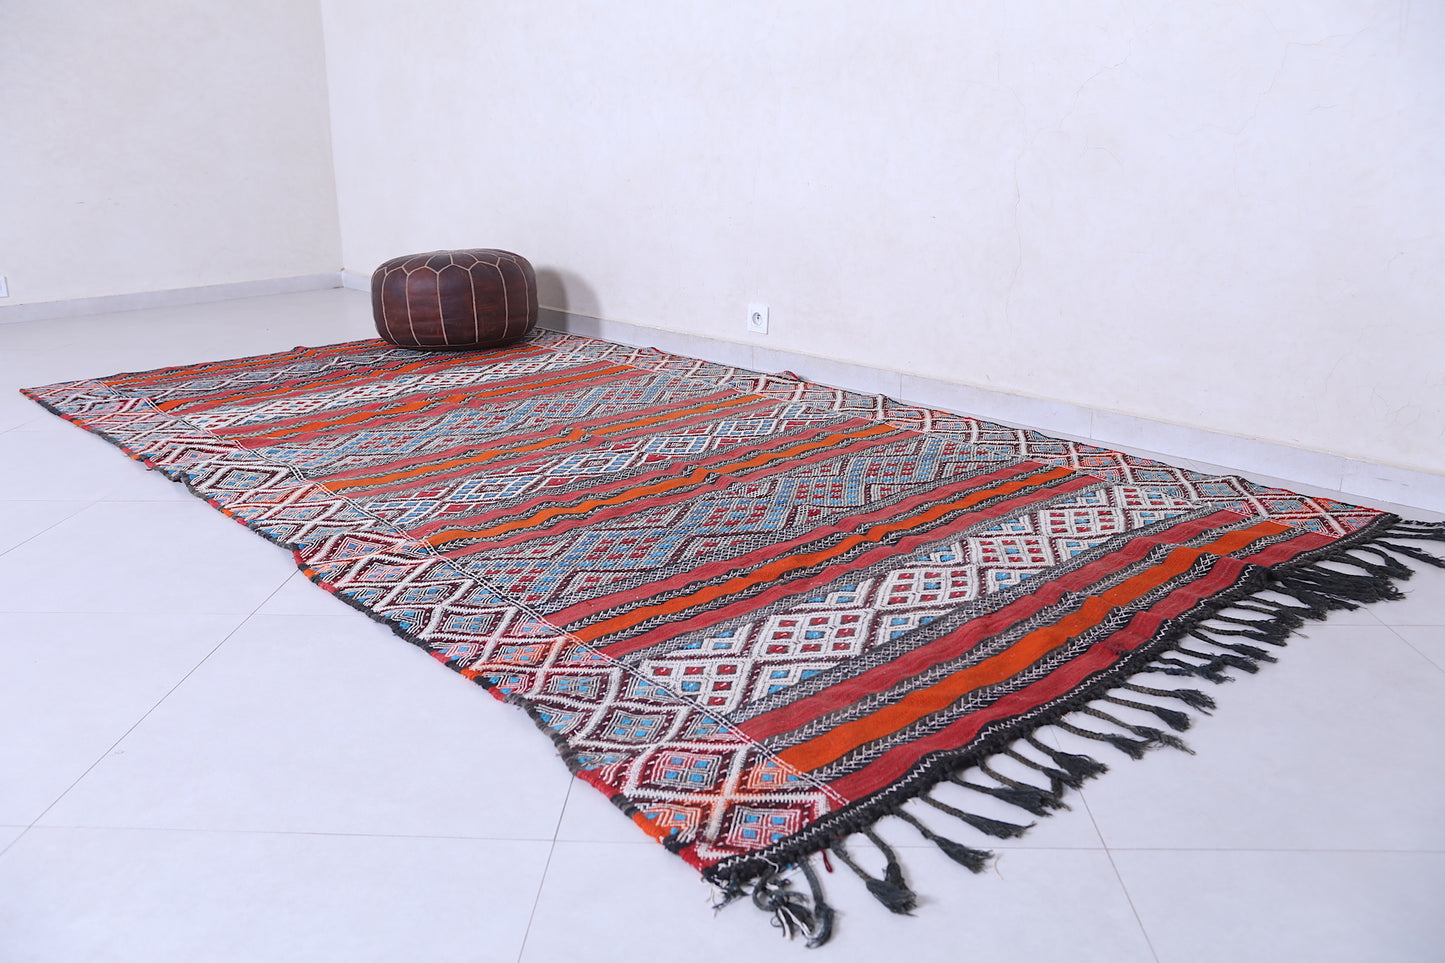 Handwoven kilim rug 5.7 ft x 10.8 ft